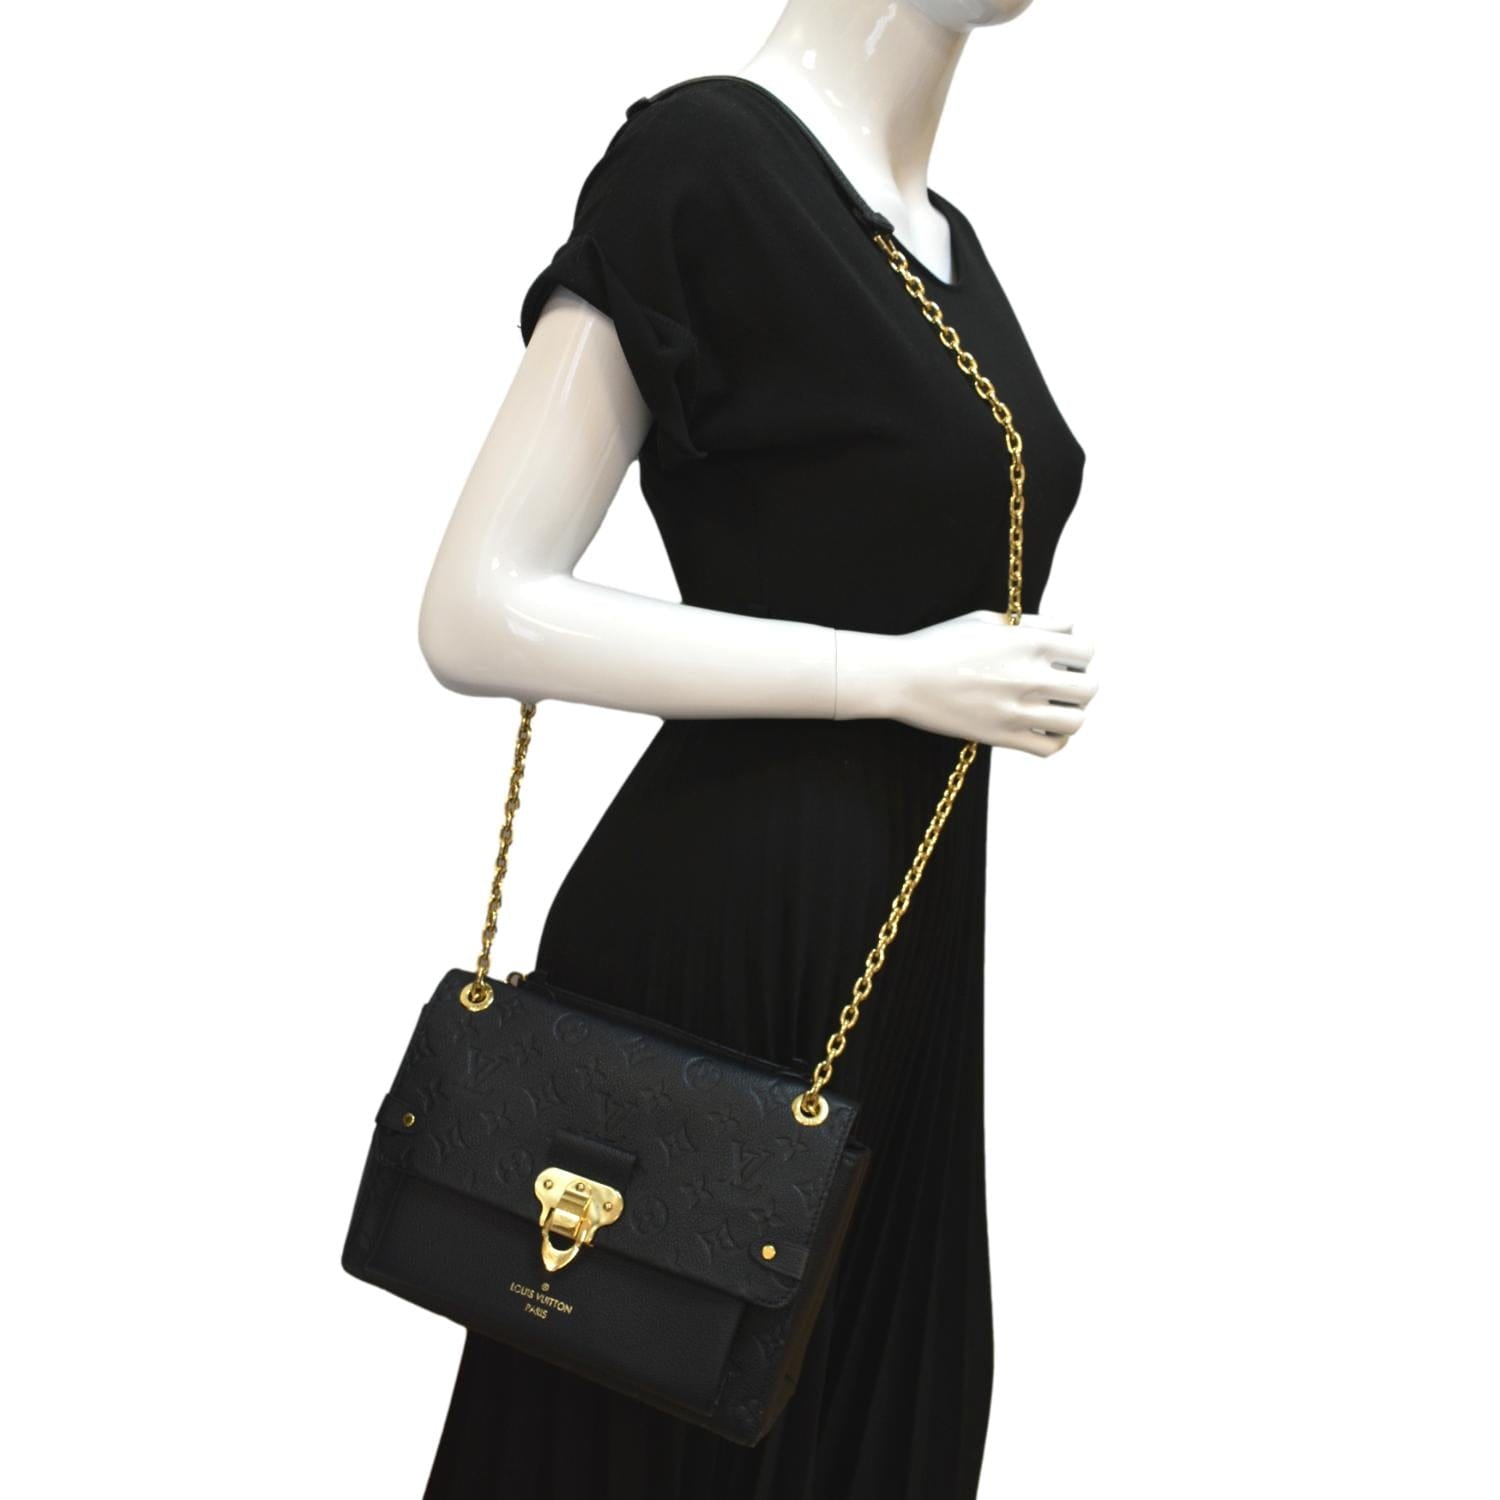 Louis Vuitton Empreinte Monogram Leather Handbag